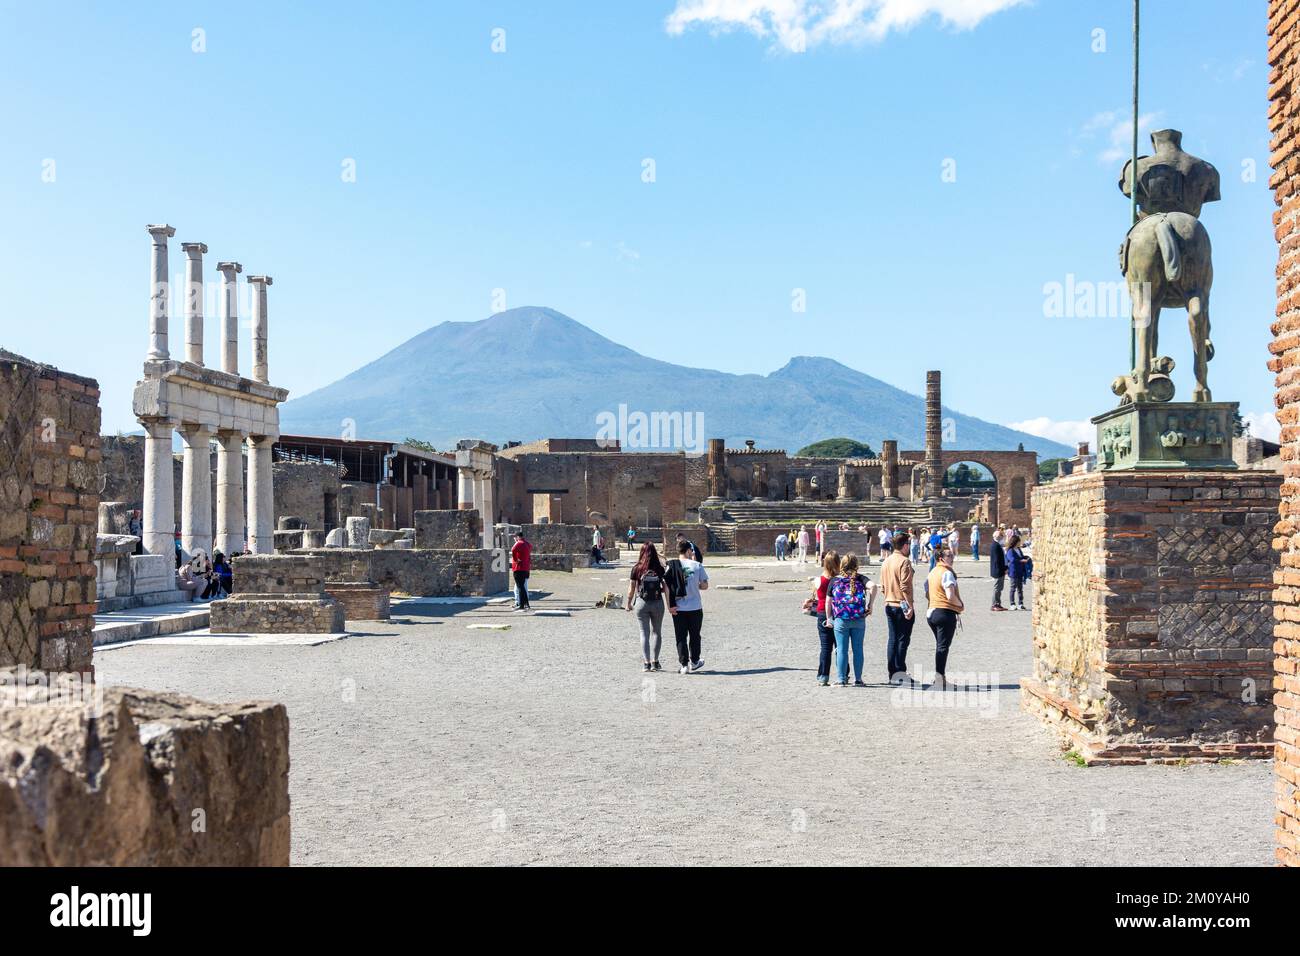 Statue of the Centaur with Mount Vesuvius behind, The Forum, Ancient City of Pompeii, Pompei, Metropolitan City of Naples, Campania Region, Italy Stock Photo